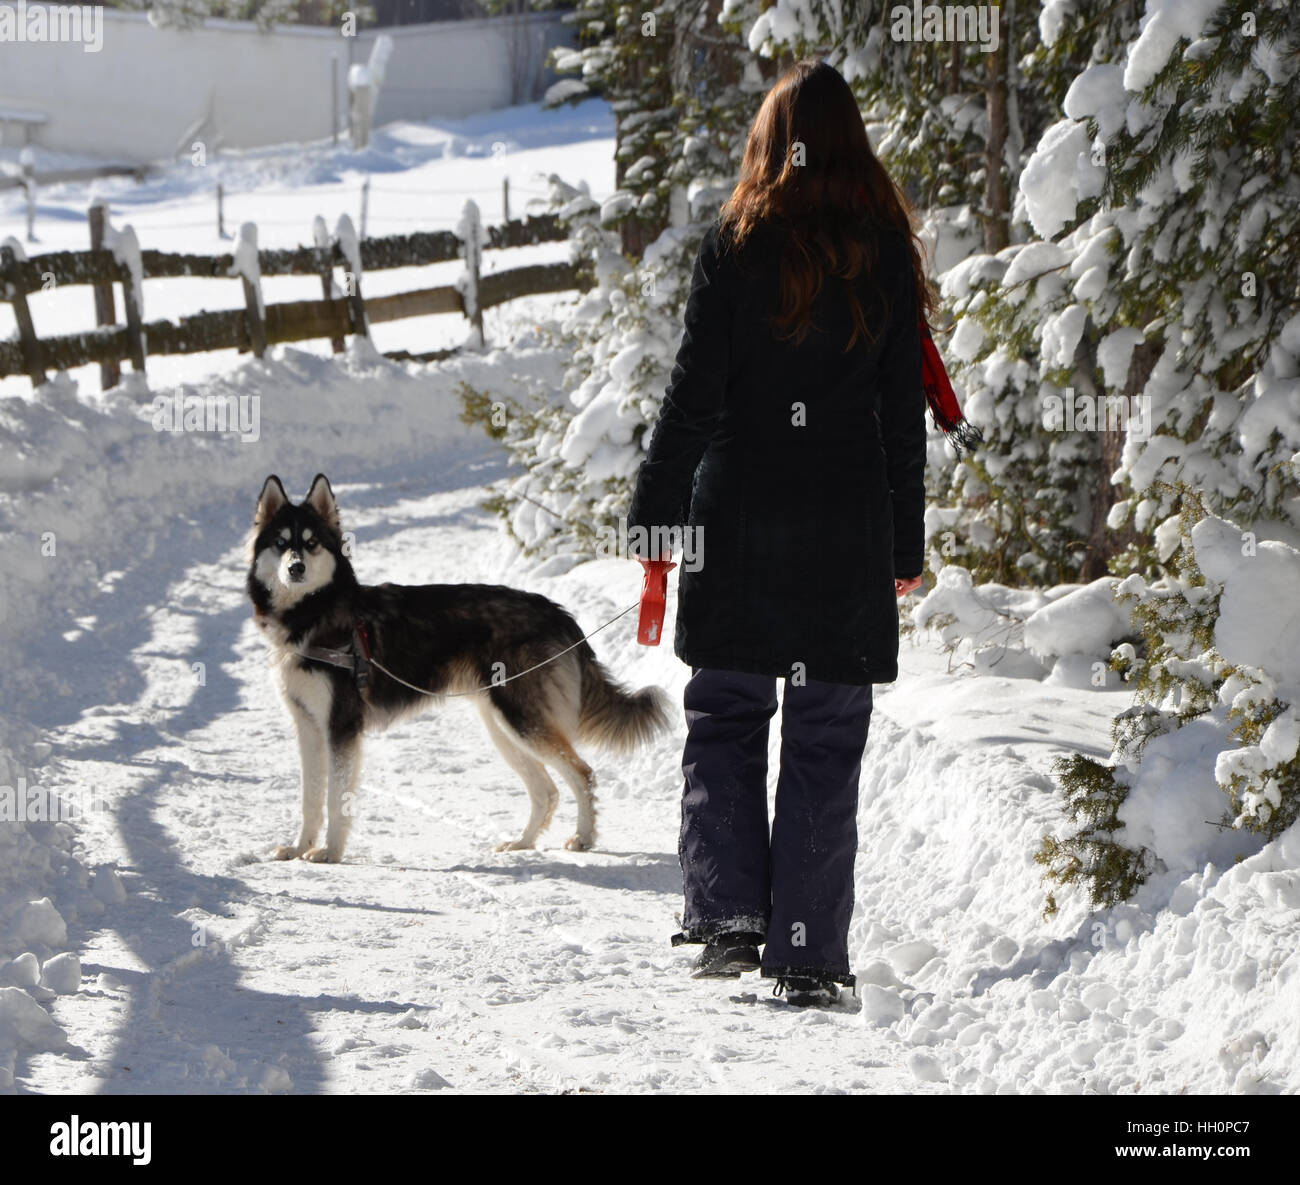 Woman walking on a snowy path in winter, Tyrol, Austria Stock Photo